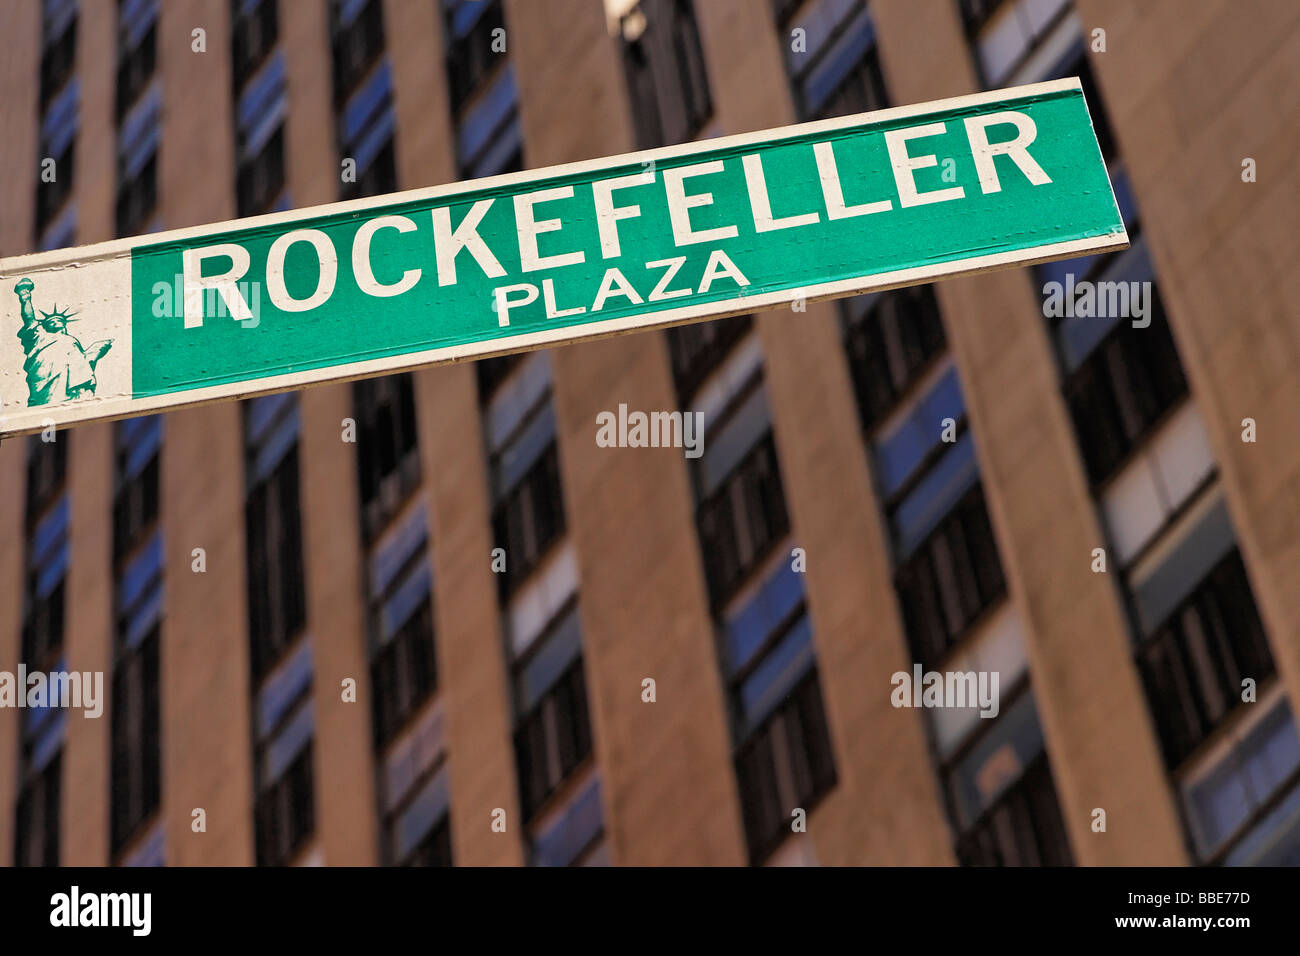 Rockefeller Plaza street sign in midtown Manhattan New York Stock Photo